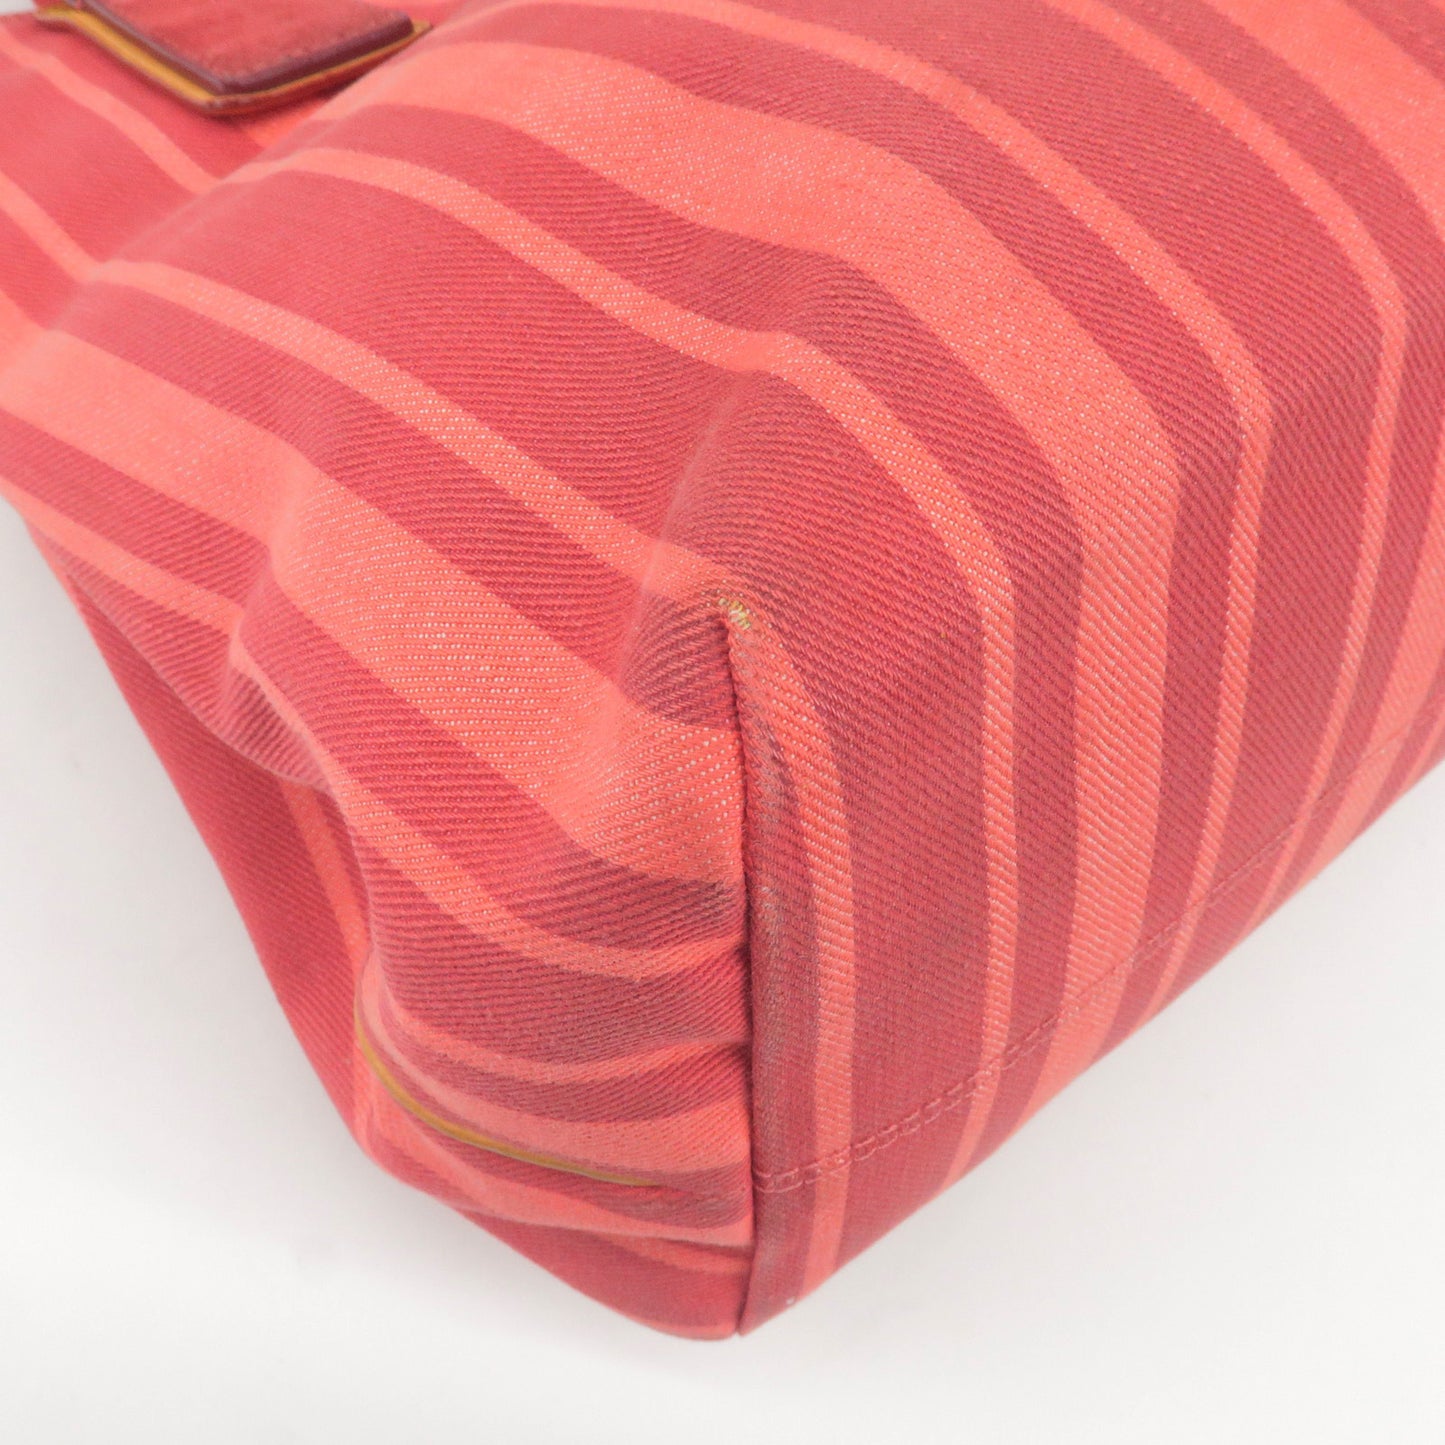 Louis Vuitton Plein Soleil Cabas PM Tote Bag Pink M94146